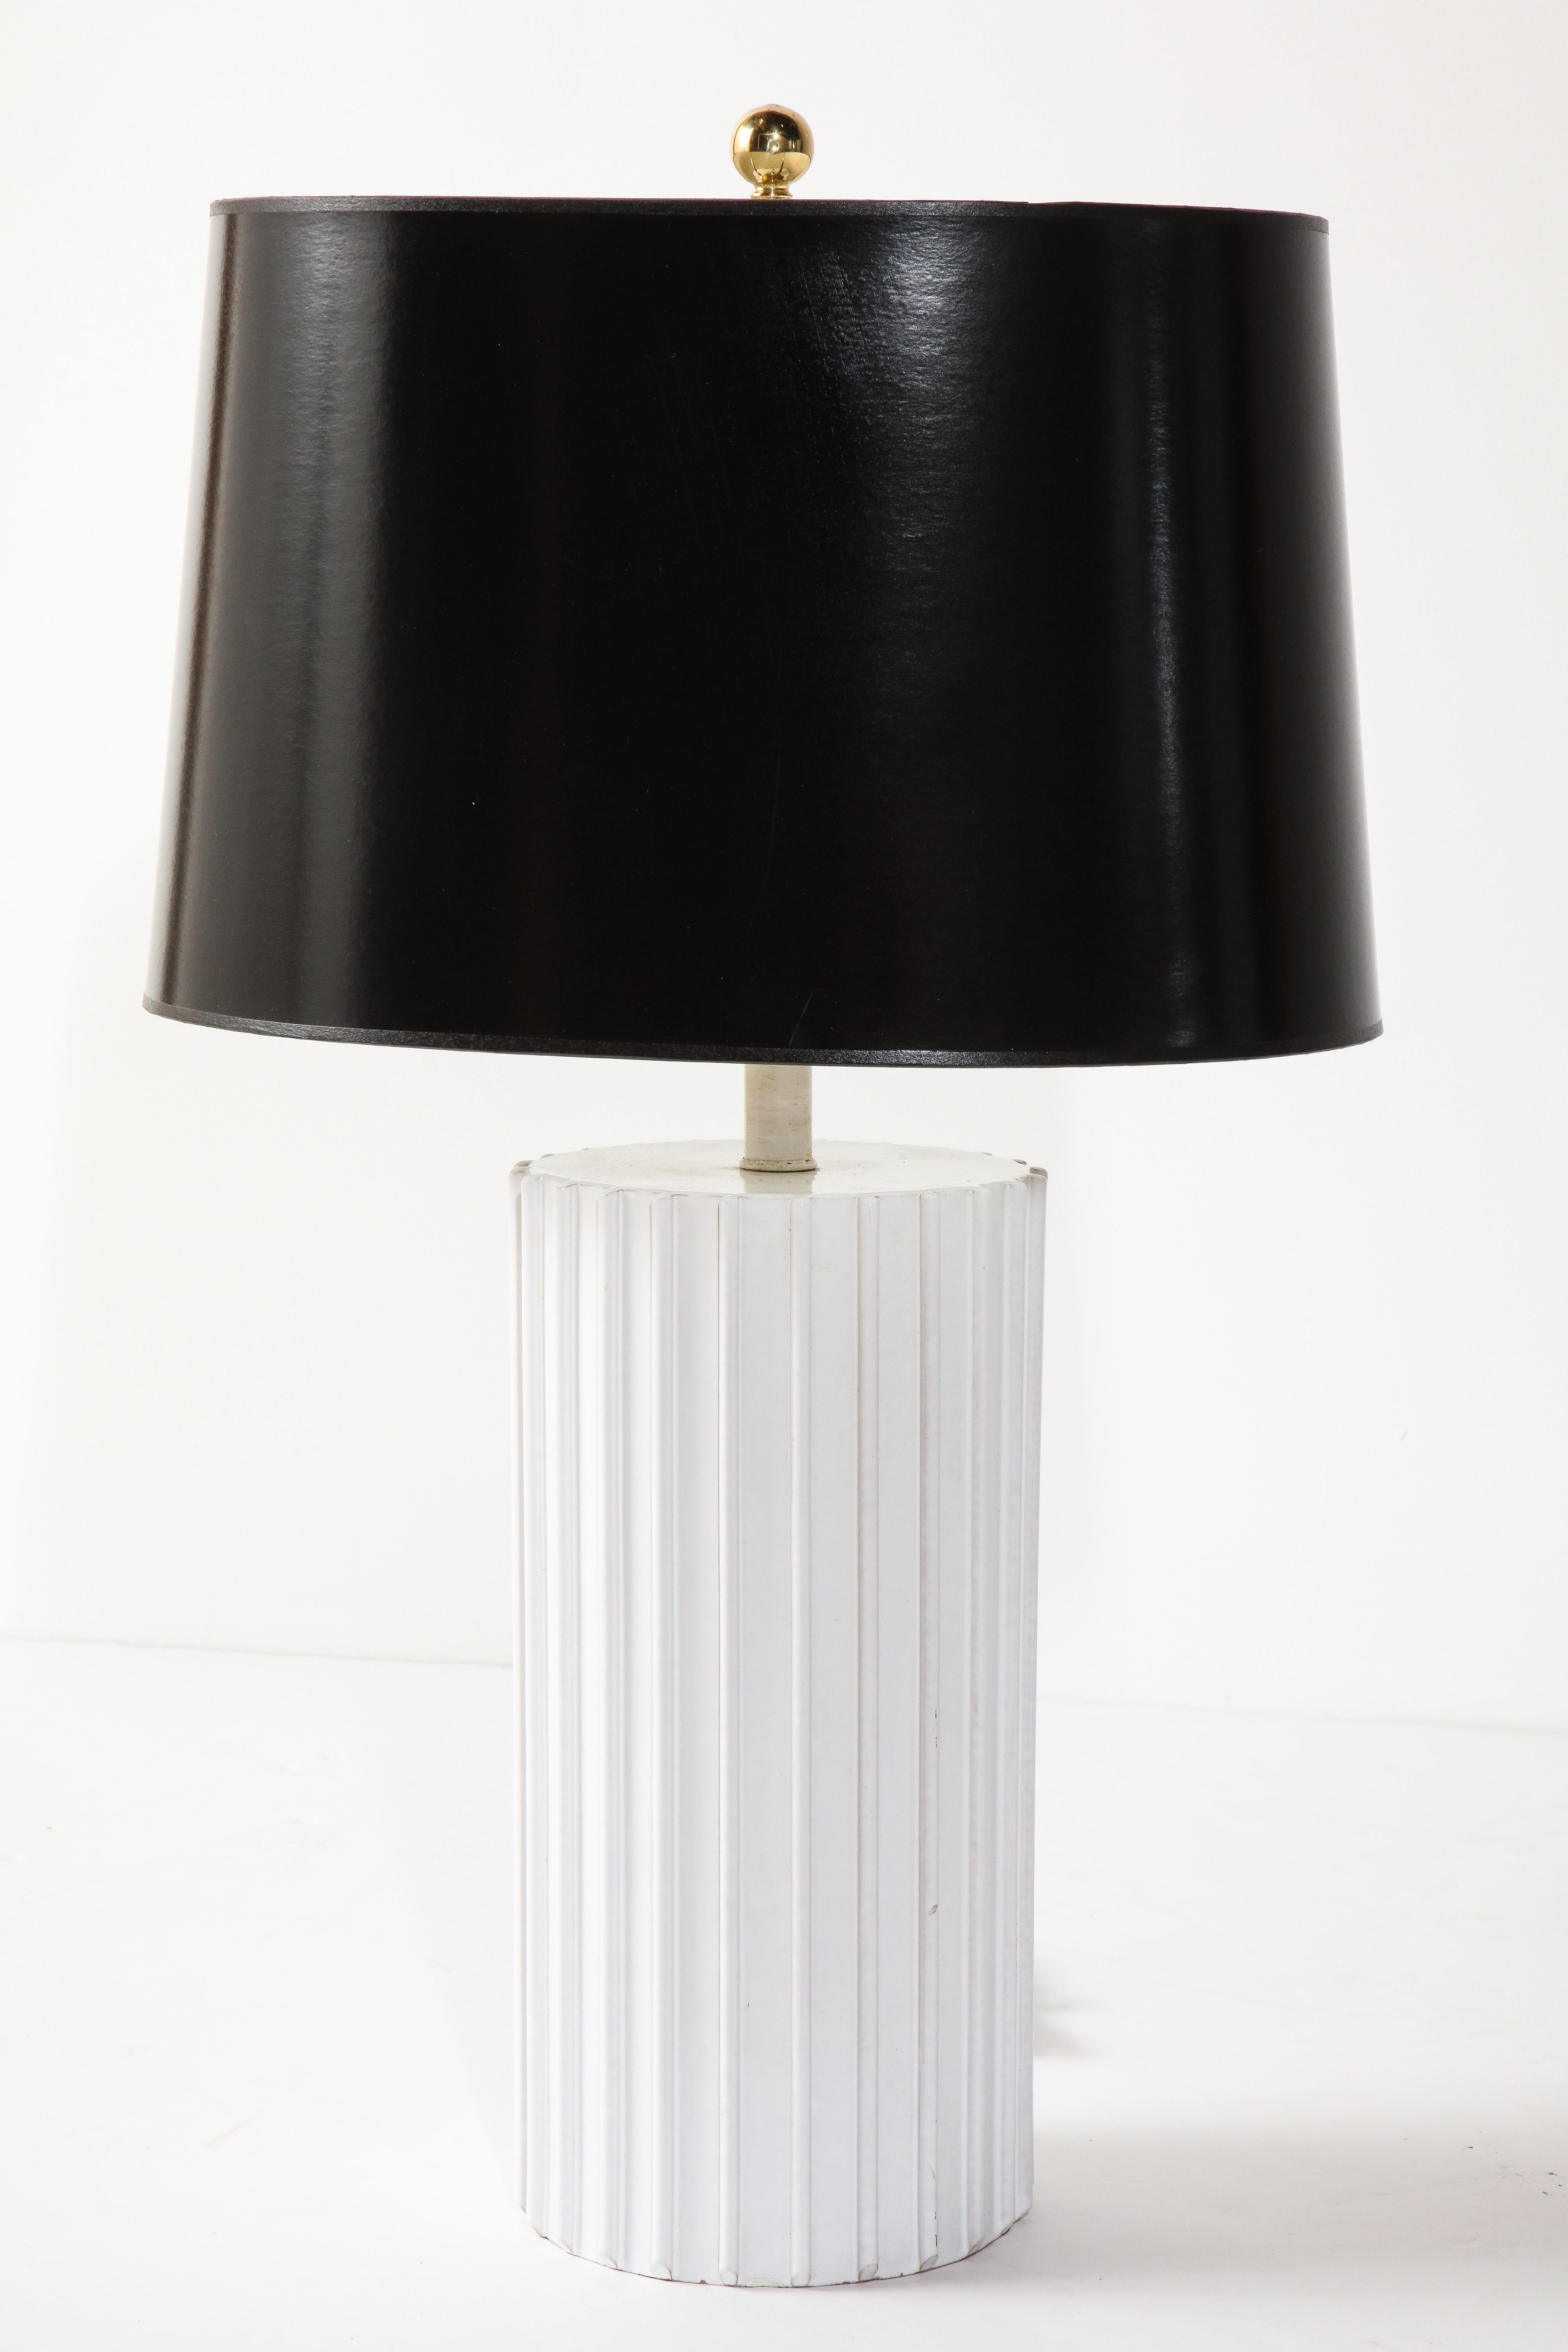 Decorative white ceramic lamp base is 15.5